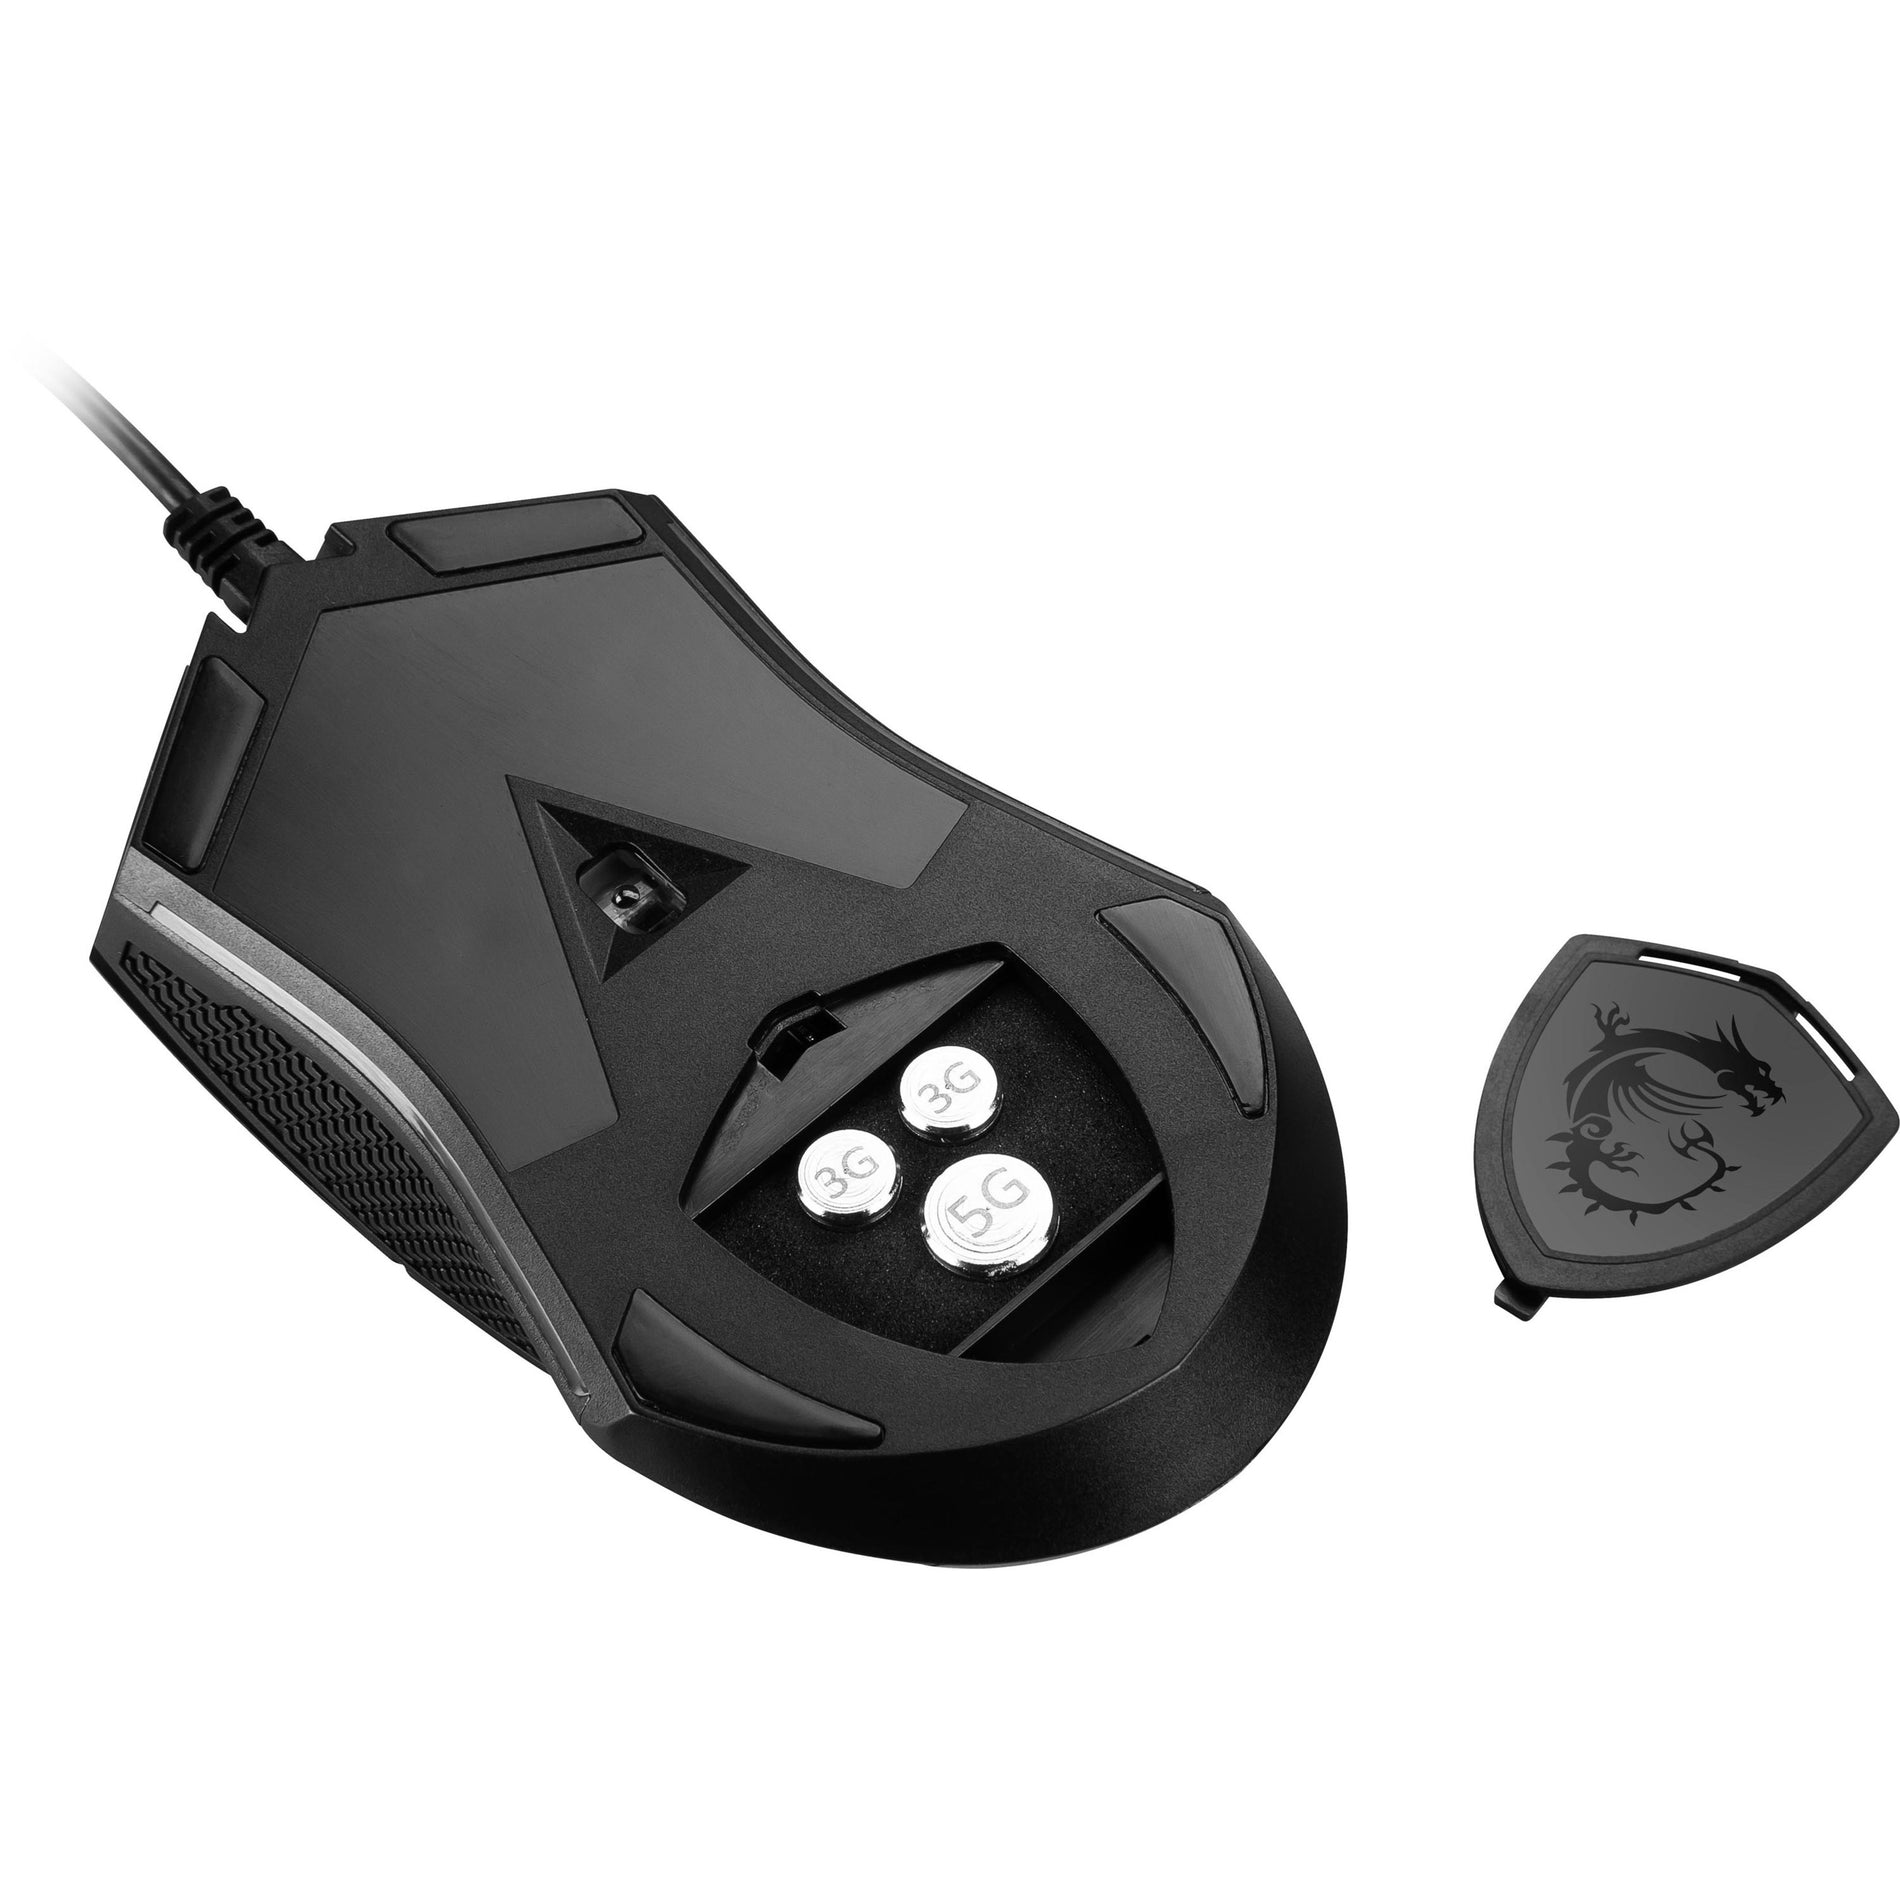 MSI CLUTCHGM08 Clutch GM08 Gaming Mouse, Symmetrical Design, 4200 DPI, 6 Buttons, USB 2.0